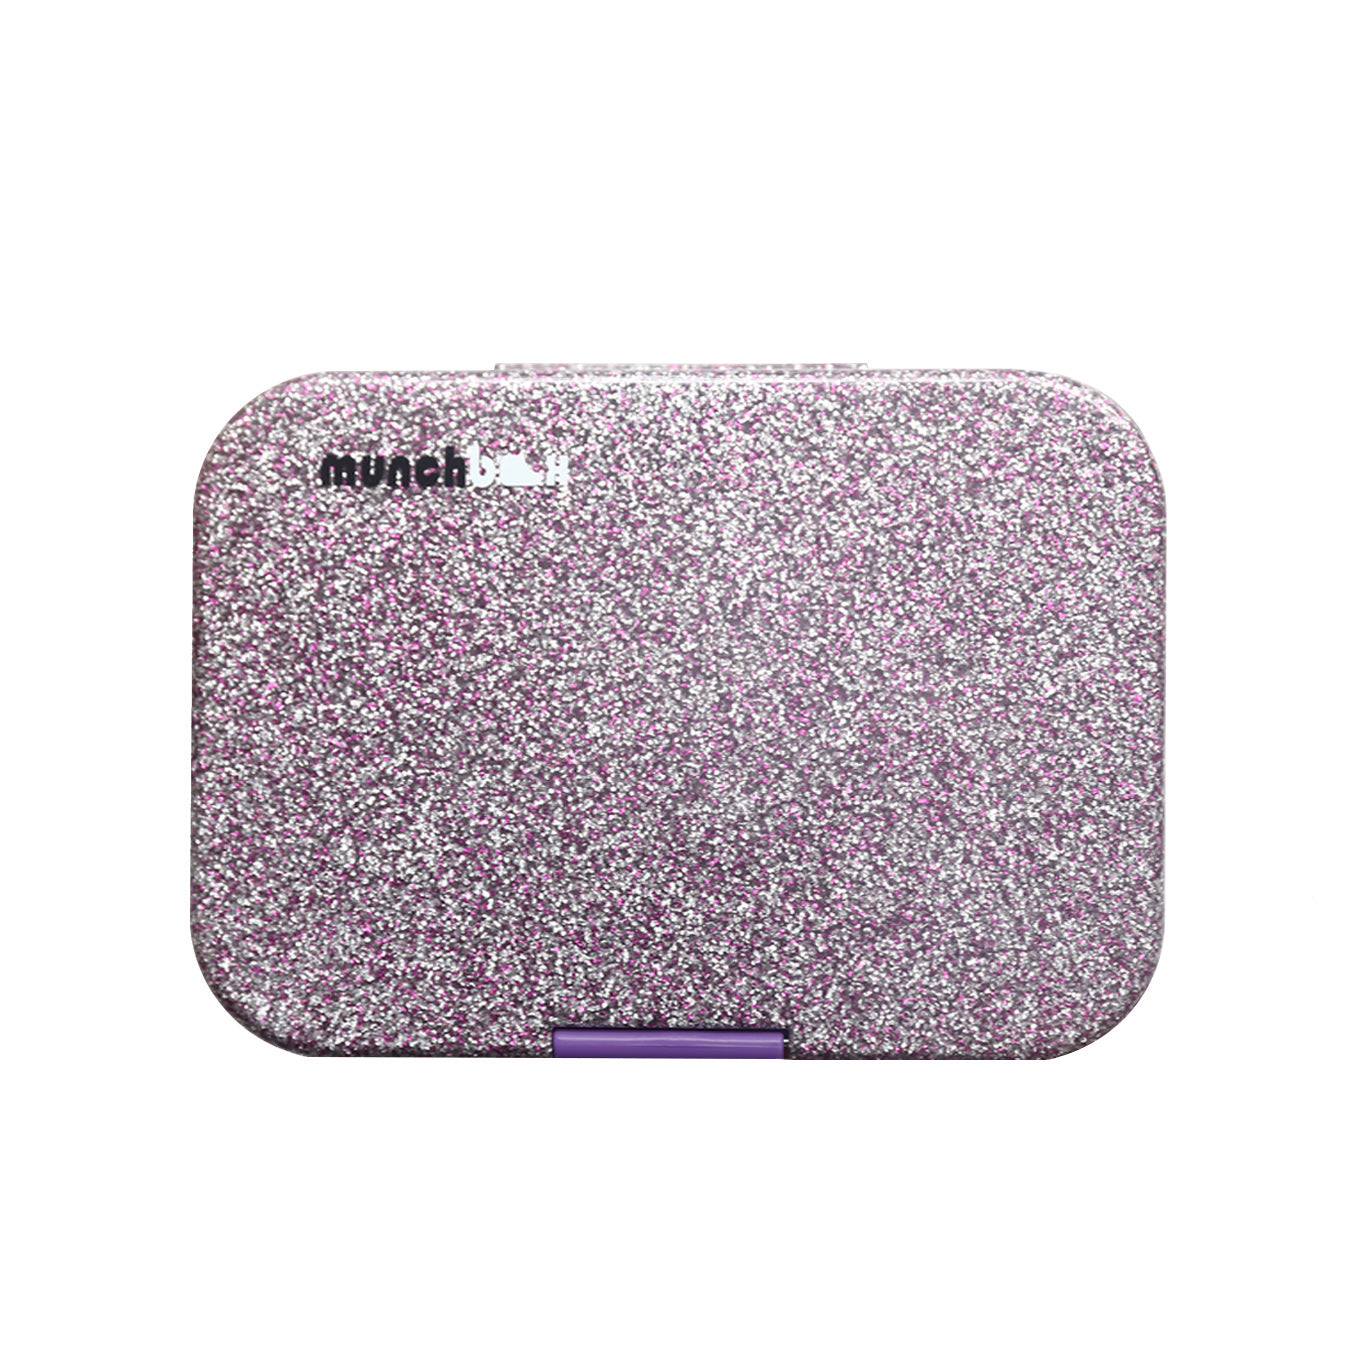 Munchbox Midi 5 - Sparkle Purple